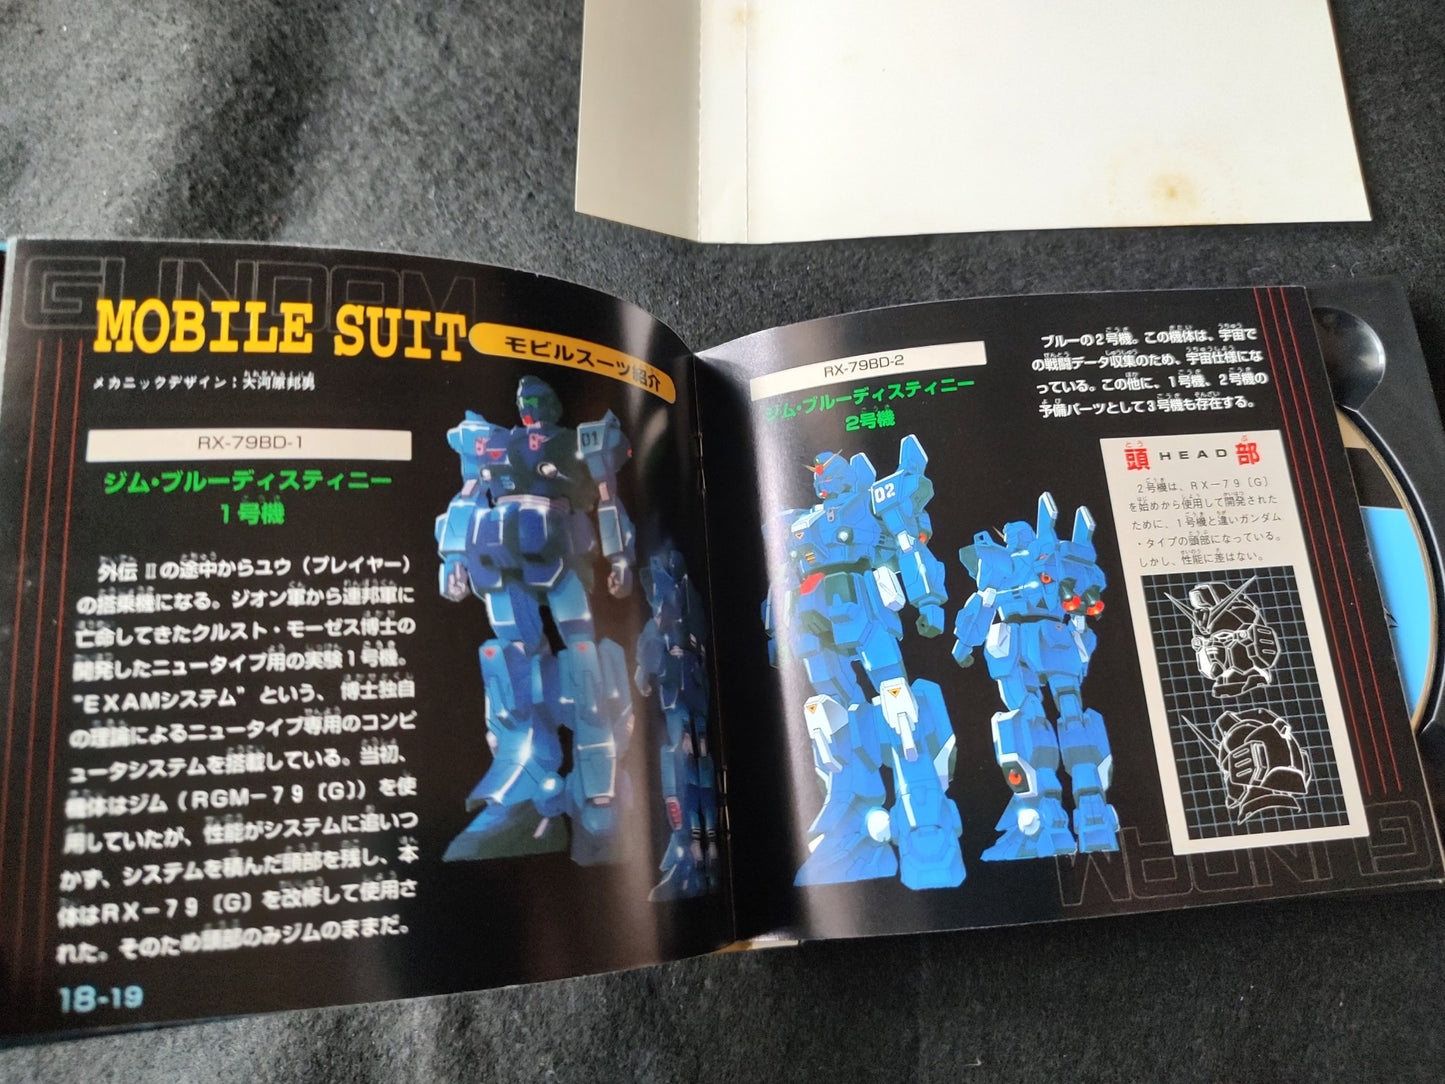 Mobile Suit Gundam, Gundam Gaiden 1,2,3, Z Gundam SEGA Saturn Games set-c0710-